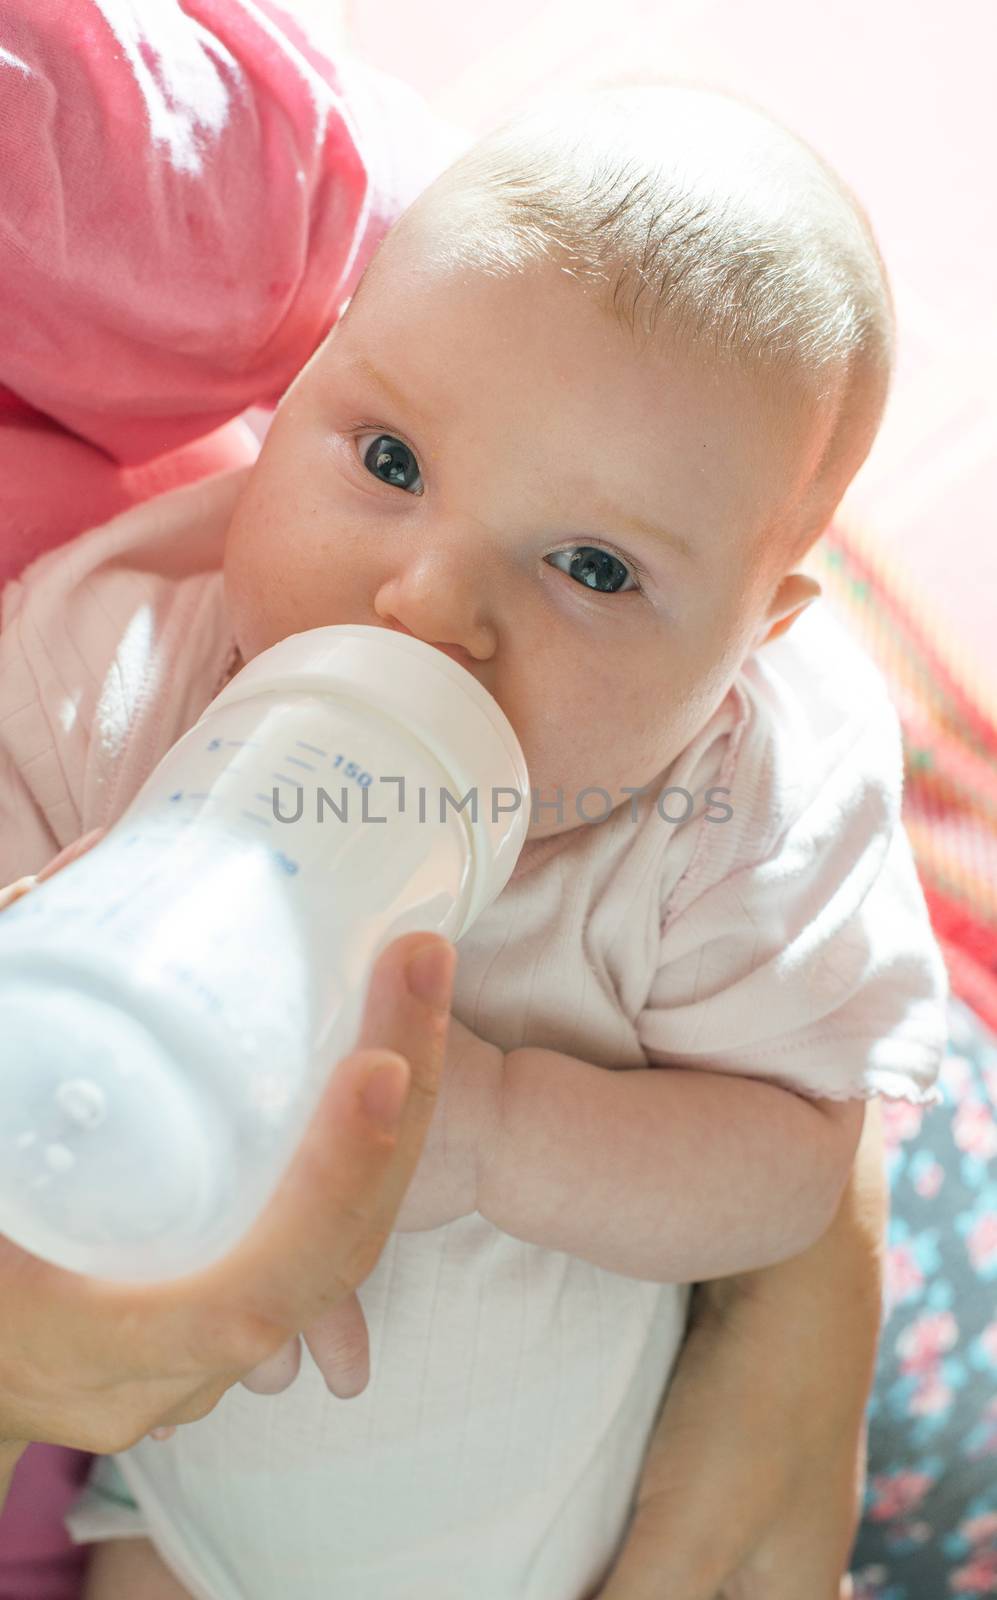 Baby sucks on a bottle by deyan_georgiev